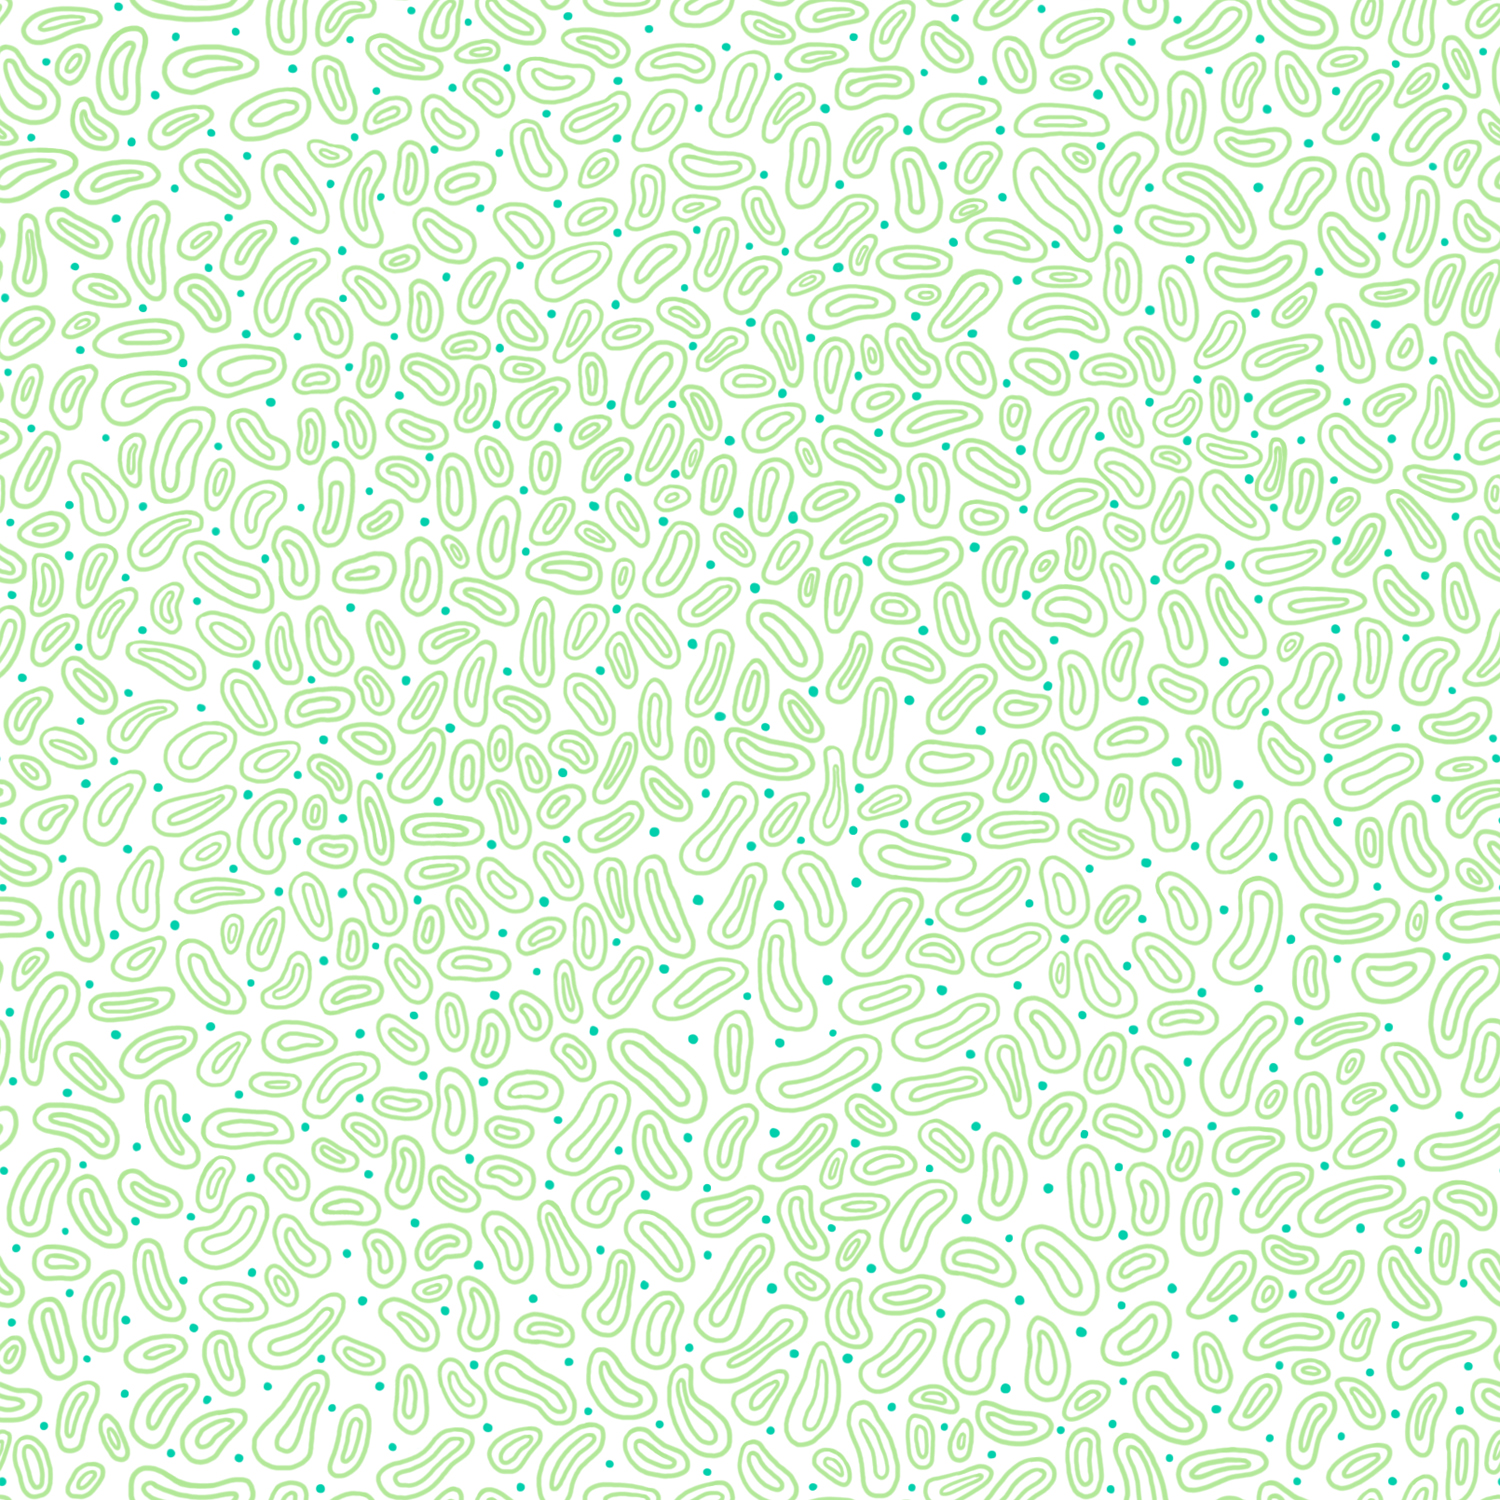 pattern_01.jpg